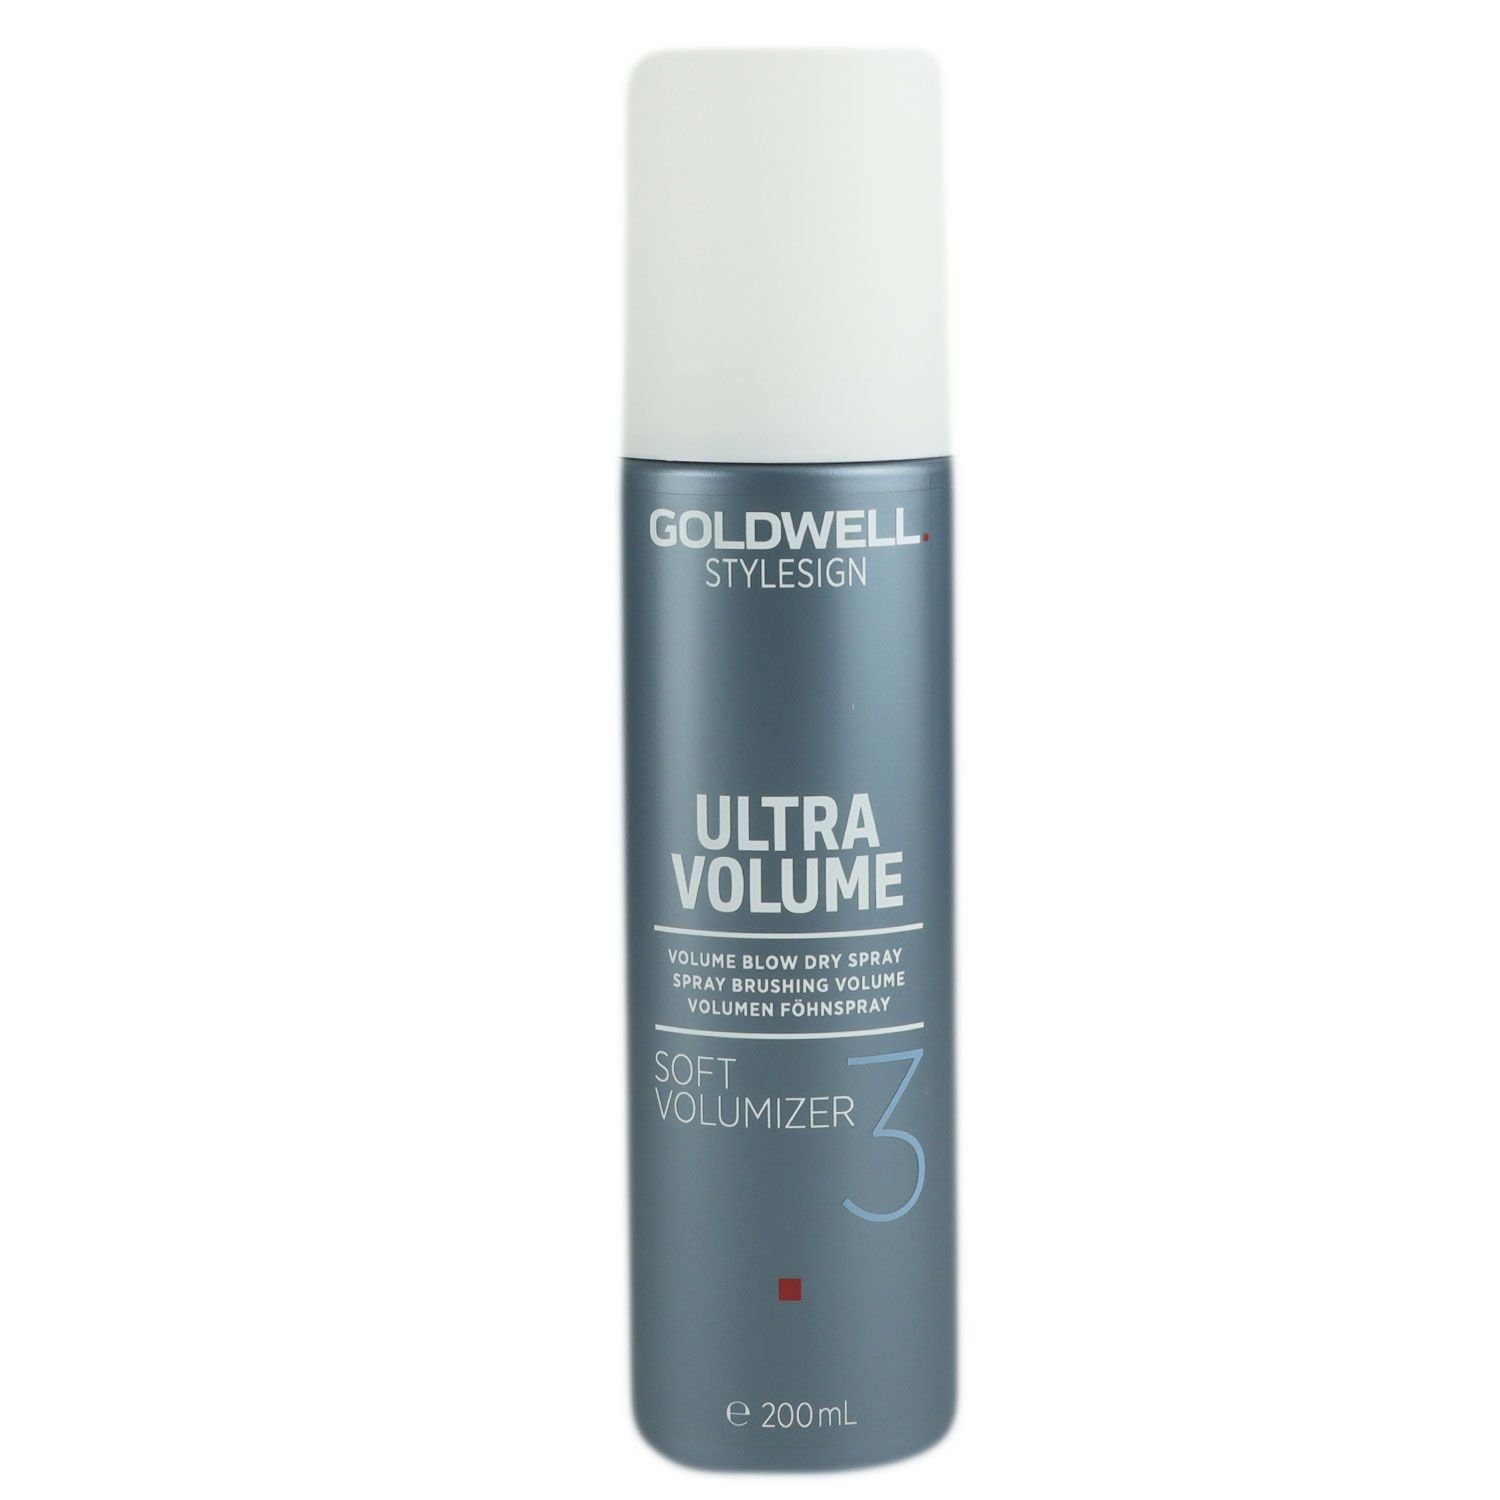 Goldwell Haarspray Stylesign Ultra Volume Volume Blow Dry Spray Haarspray 200 ml